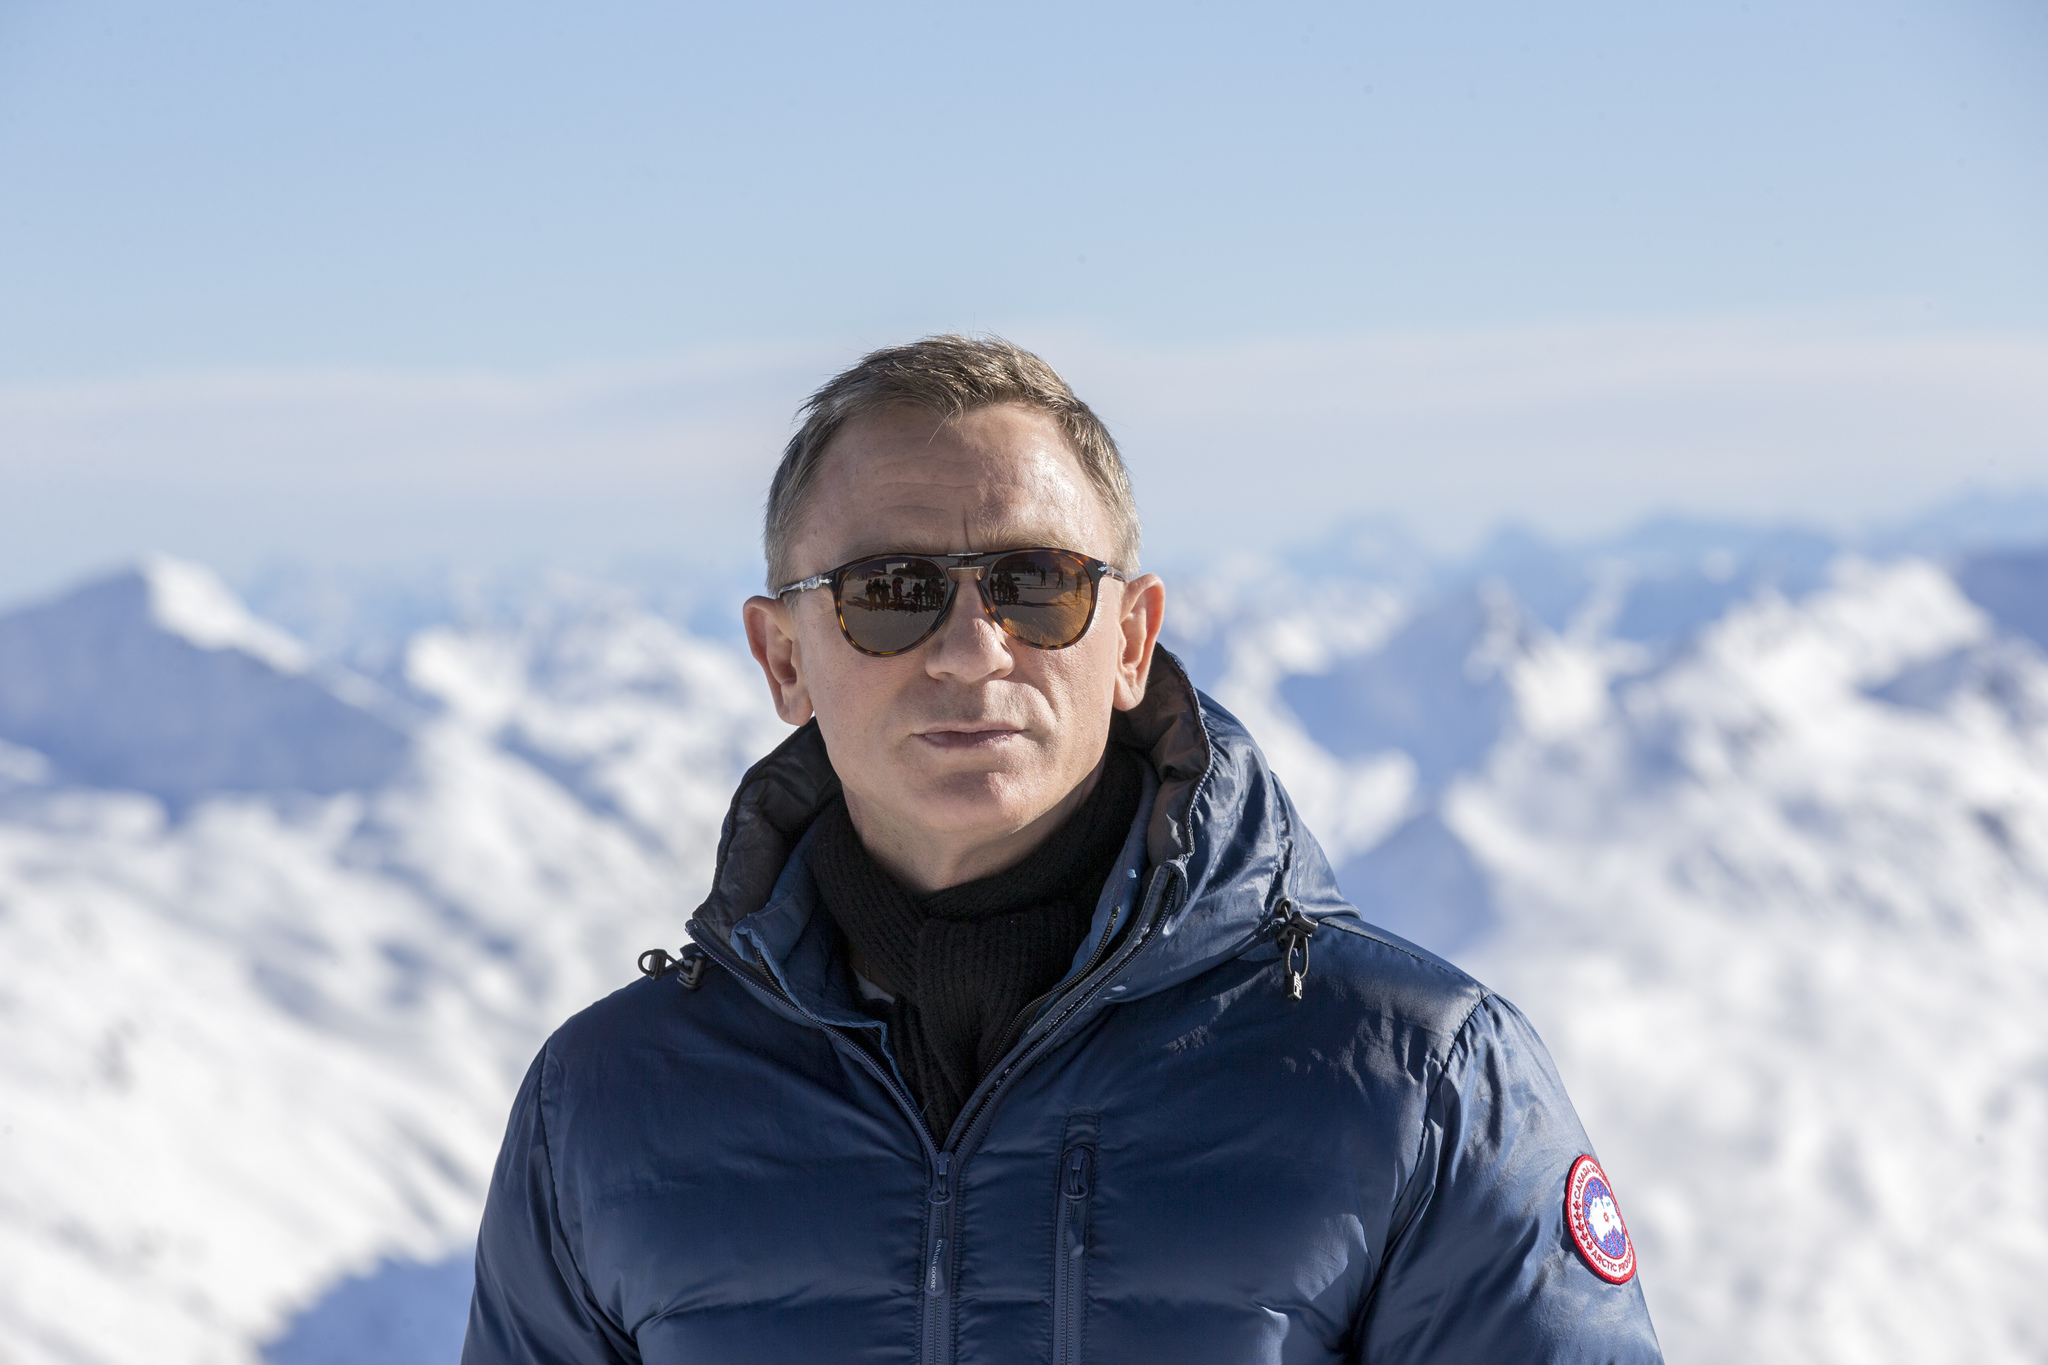 Daniel Craig at event of Spectre (2015)